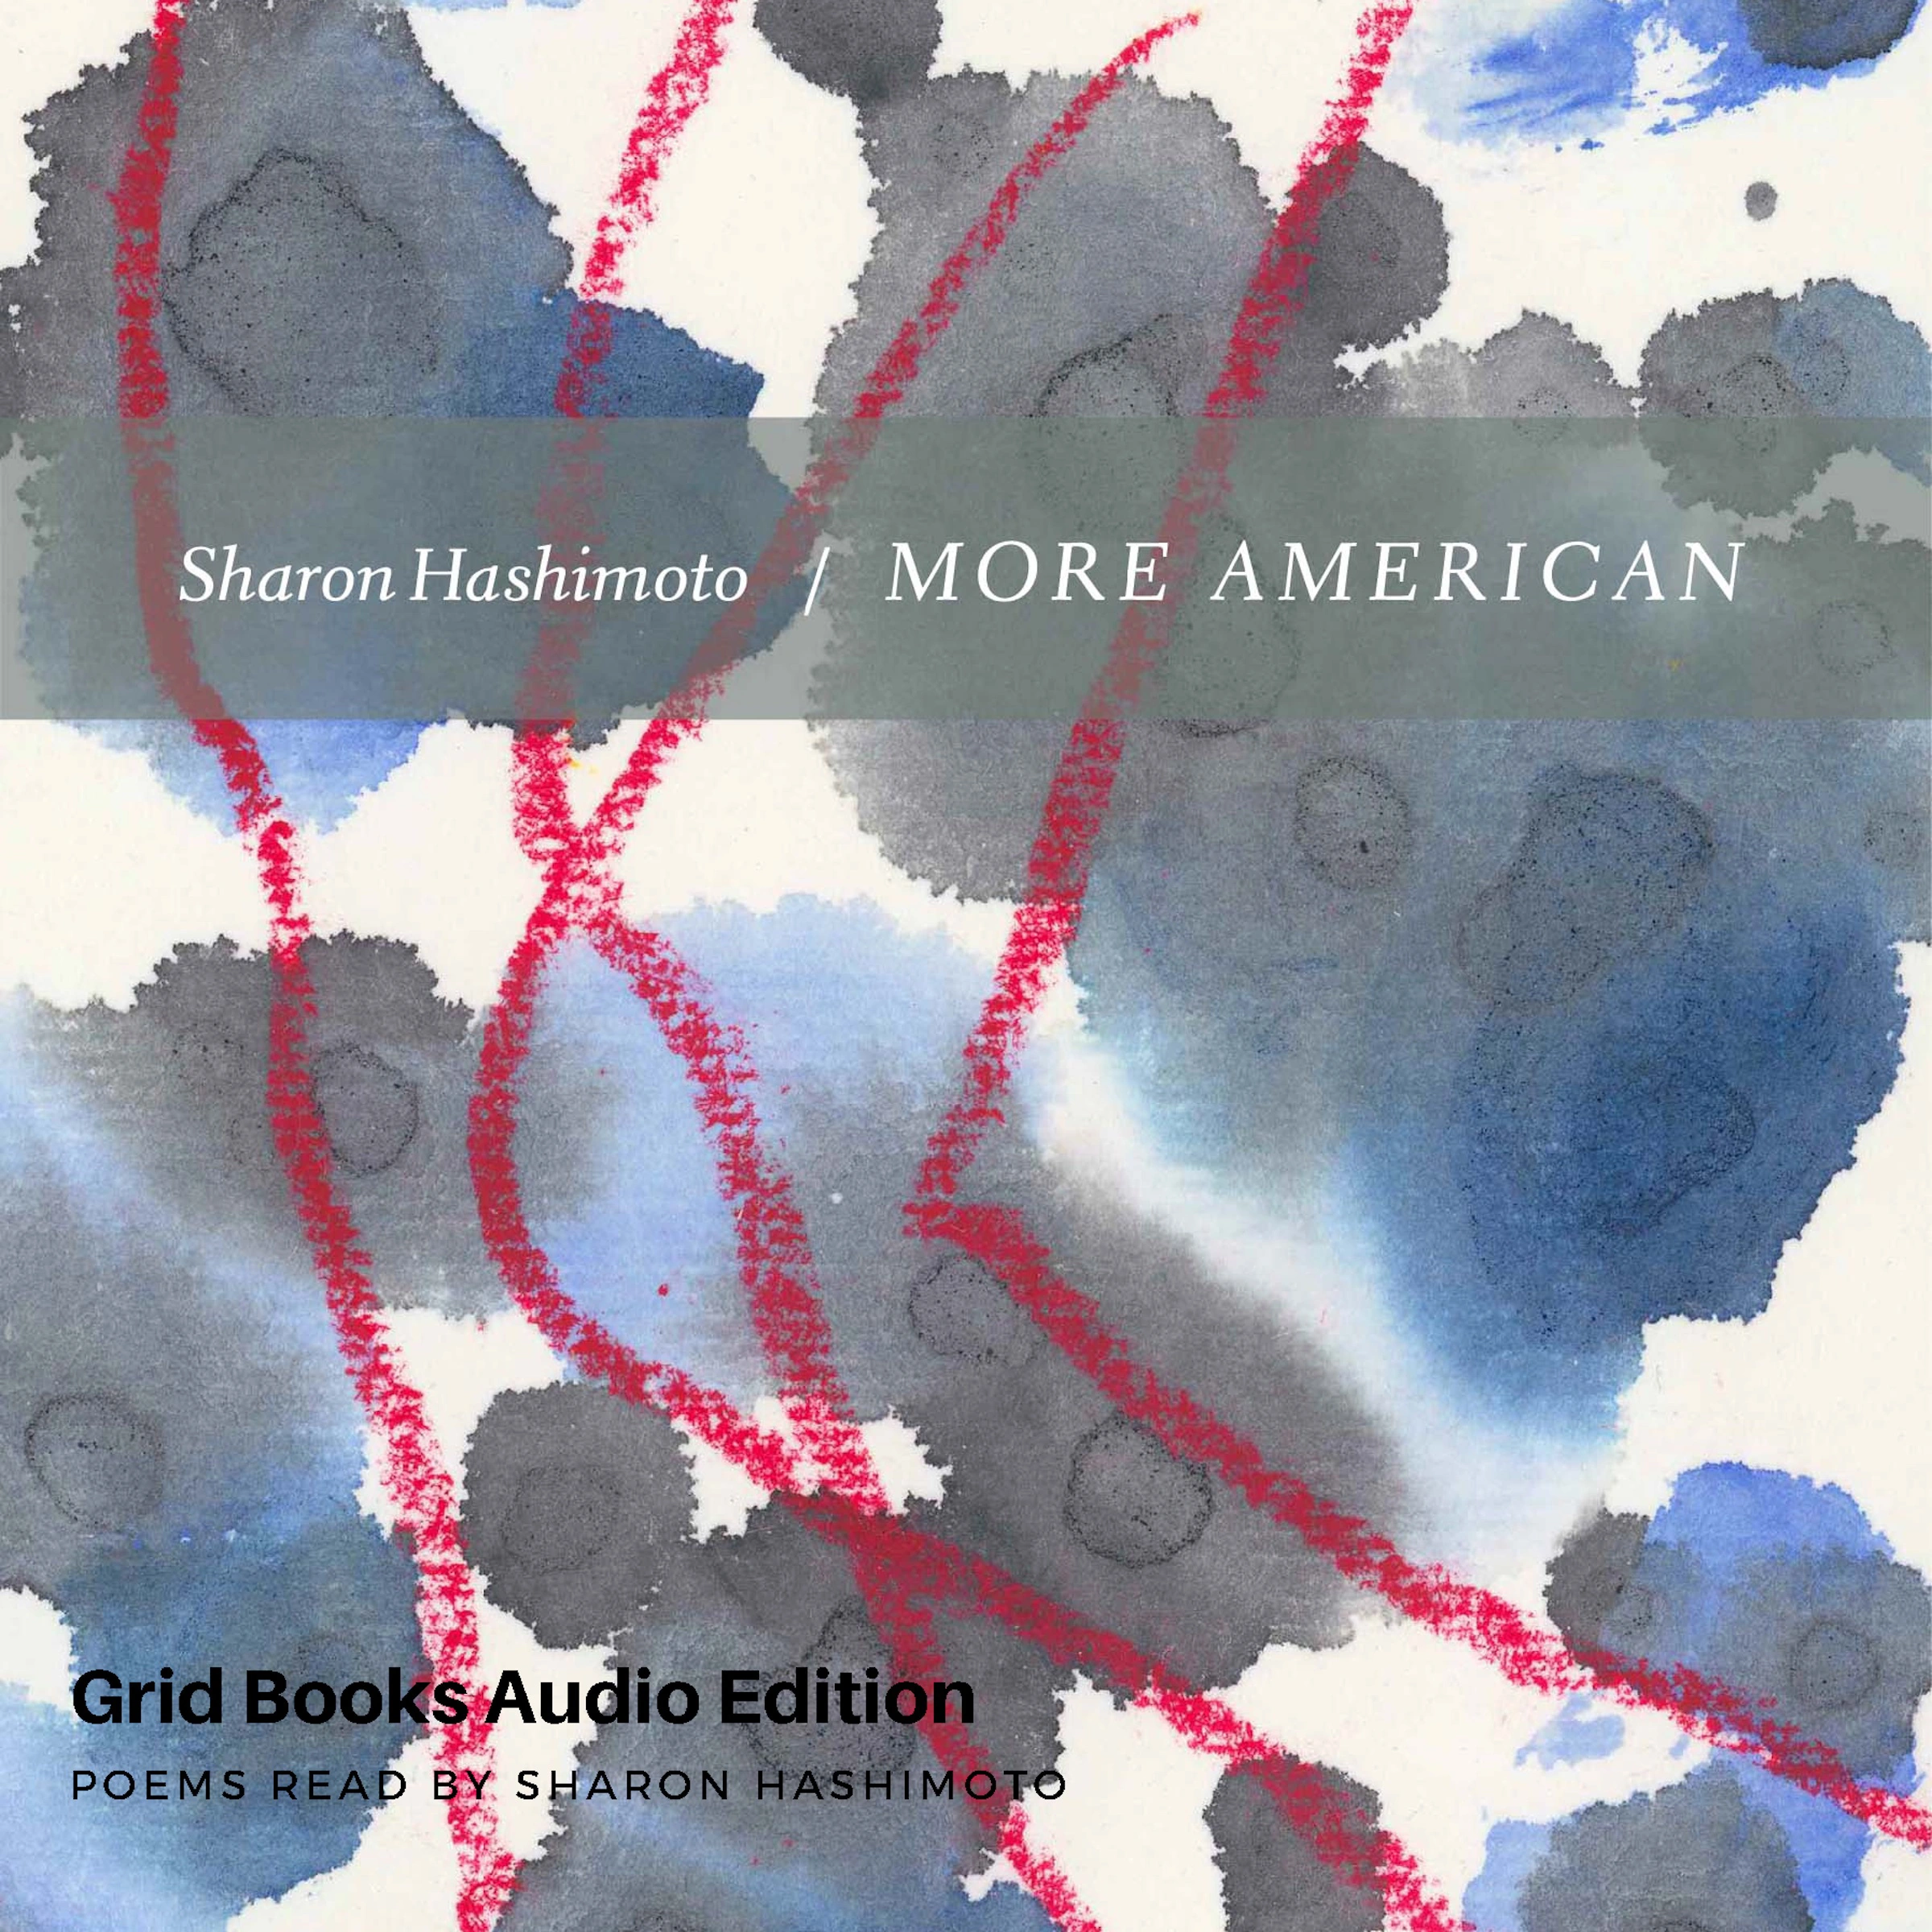 More American by Sharon Hashimoto Audiobook